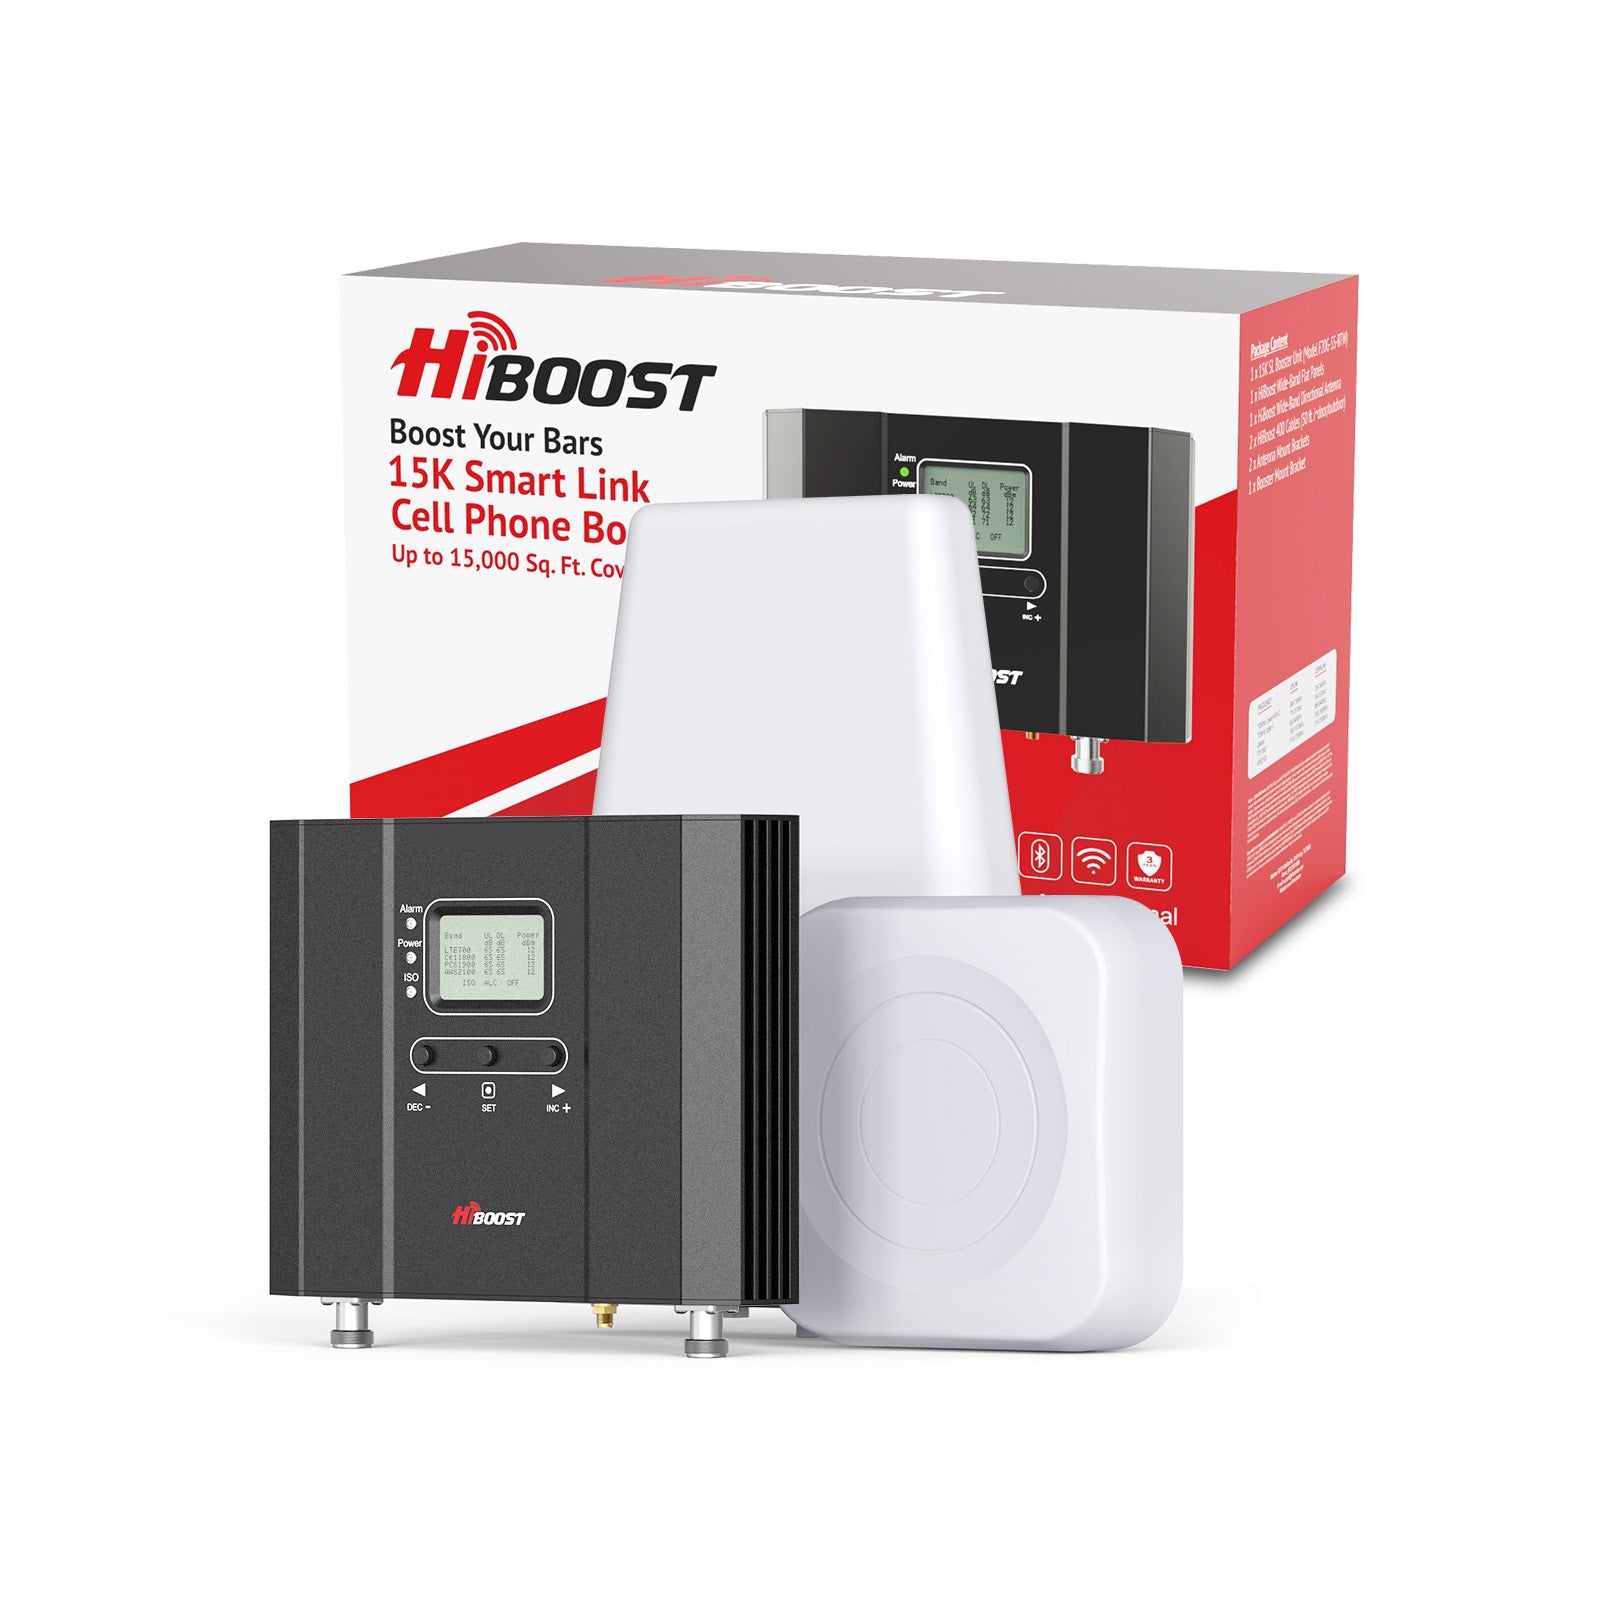 HiBoost 15K Smart Link